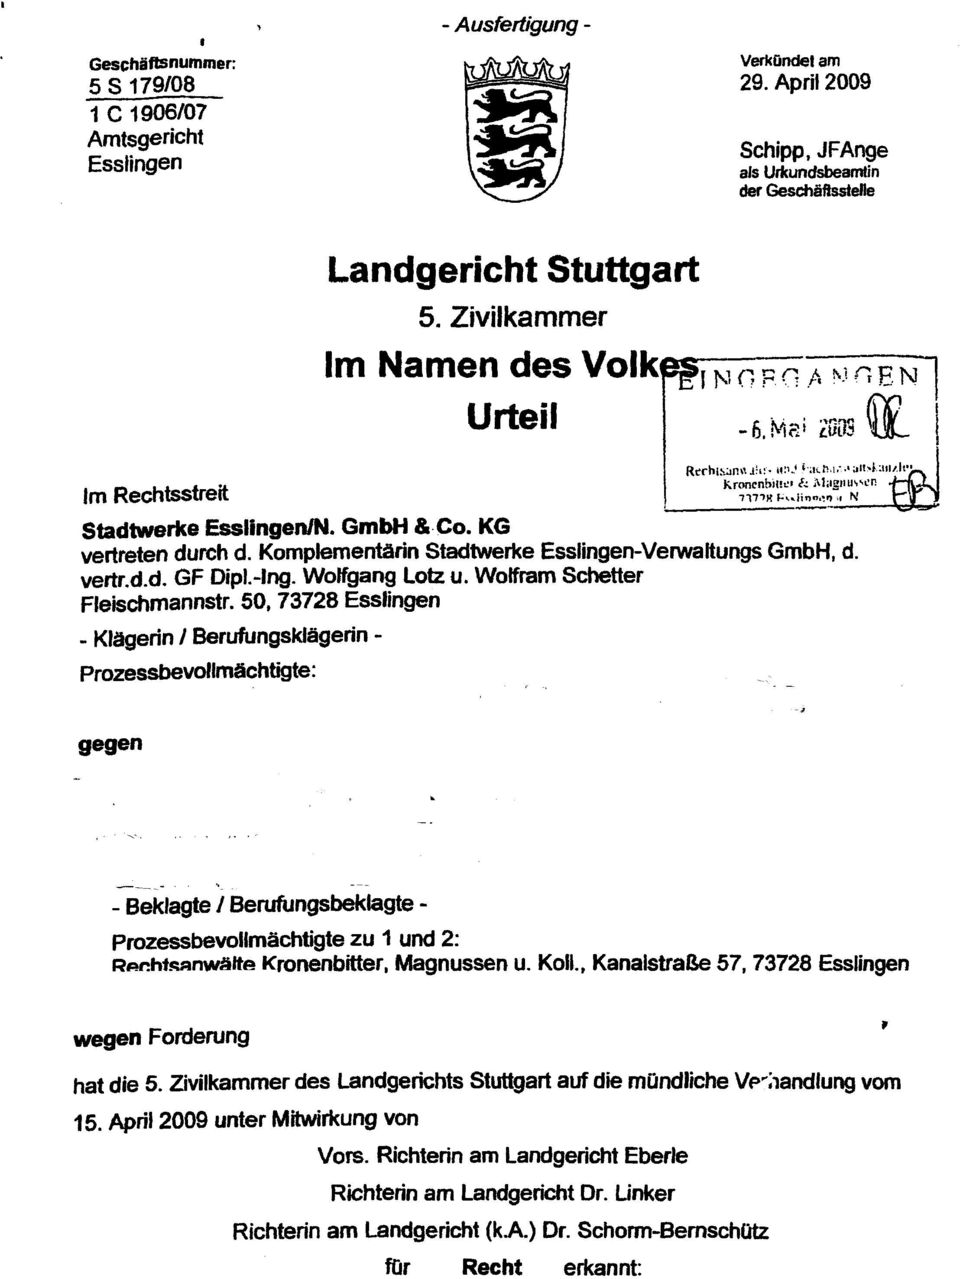 KG vertreten durch d. Komplementarin Stadtwerke Esslingen-Verwaltungs GmbH, d. vertr.d.d. GF Dipl.-Ing. Wolfgang Lotz u. Wolfram Schetter Fleischmannstr.